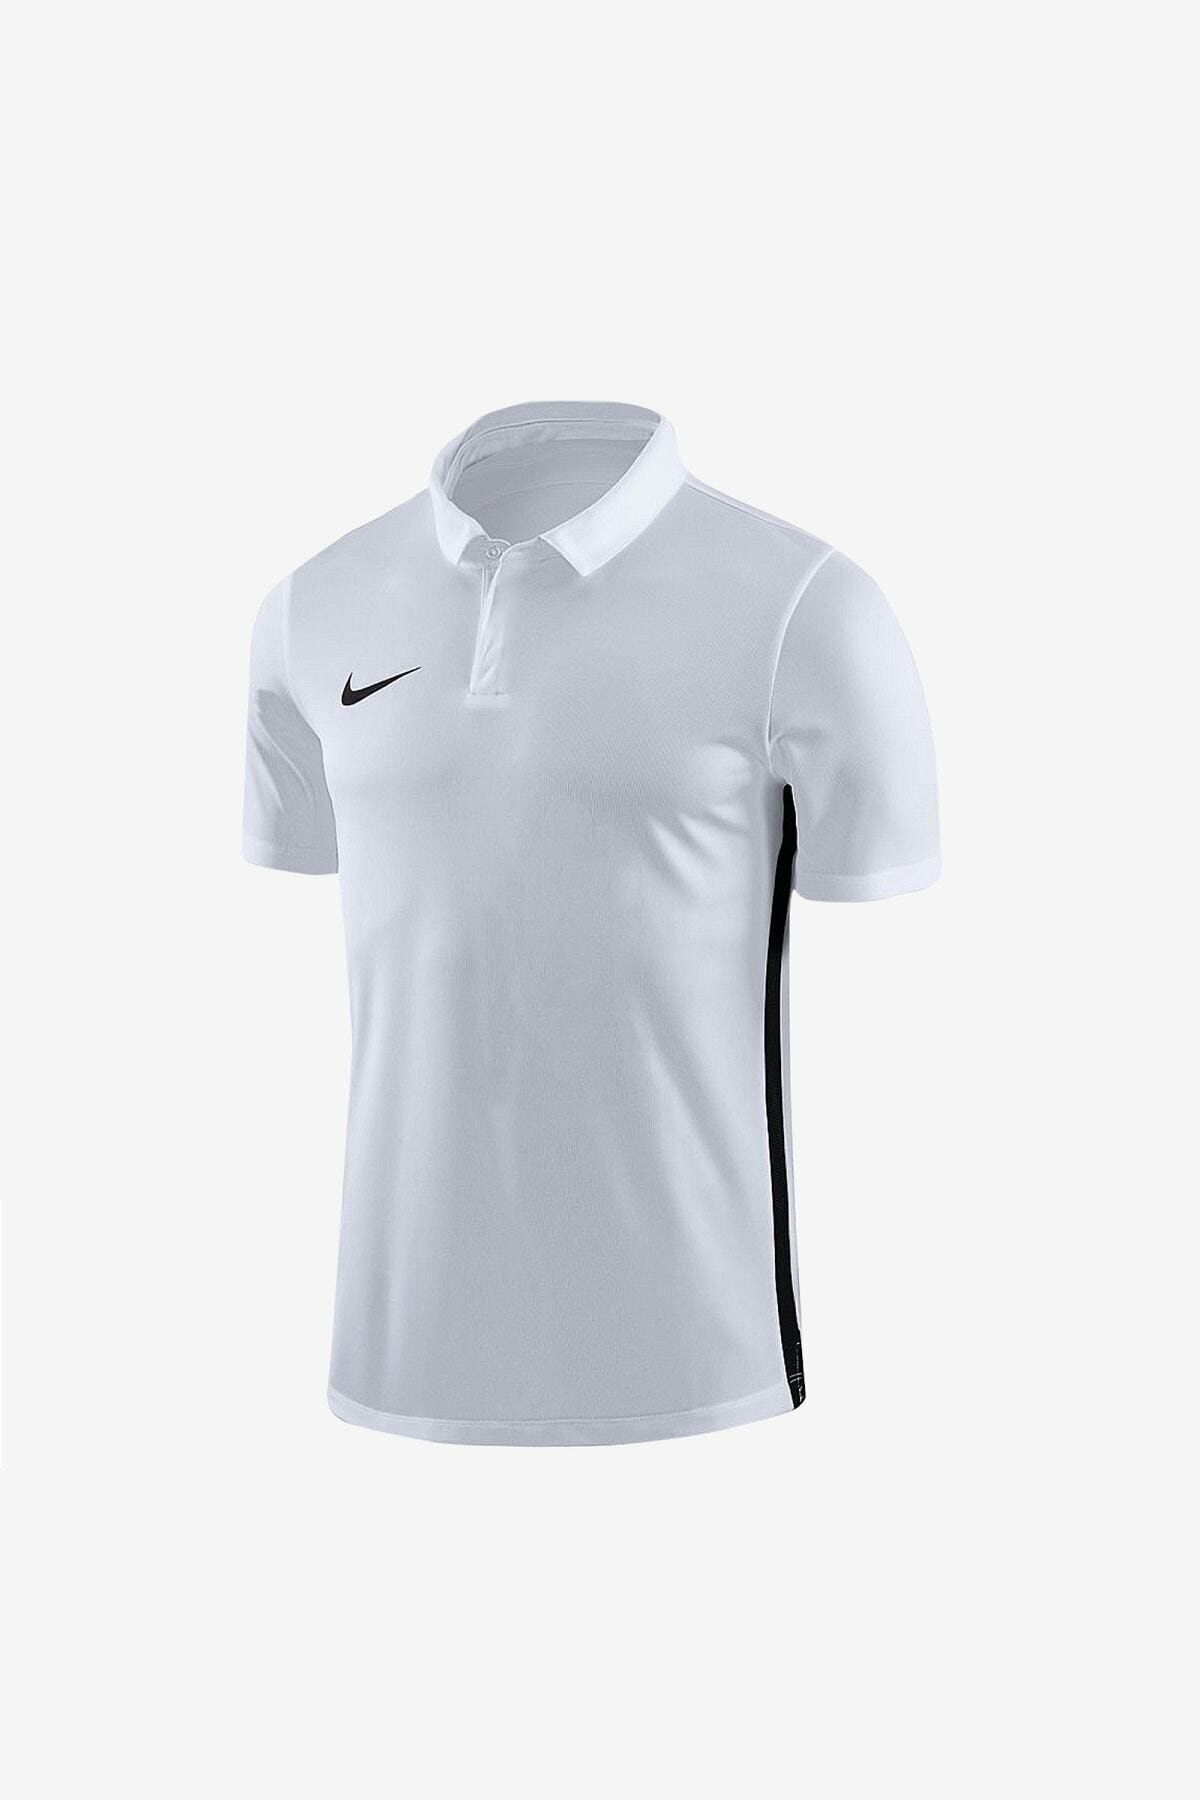 Nike Erkek Çocuk Beyaz T- Shirt - Y Drt Acdmy18 Ss - 899991-010